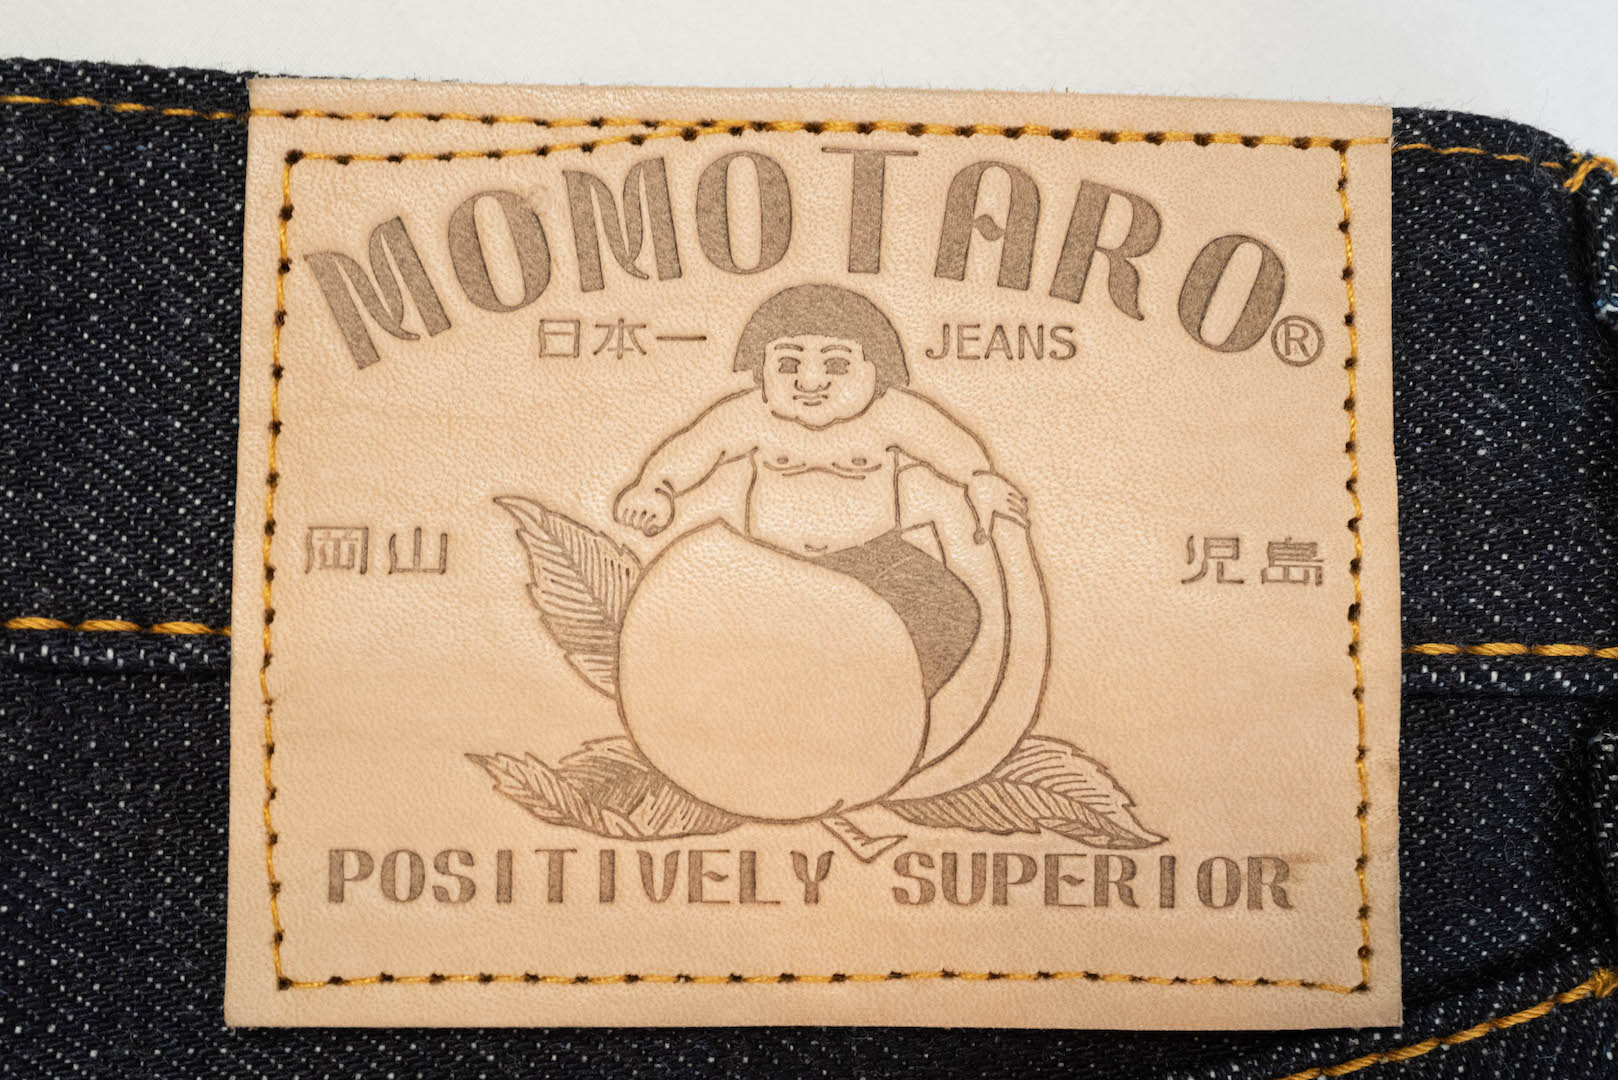 Momotaro 15.7oz 0405-SP Denim (High Tapered Fit)